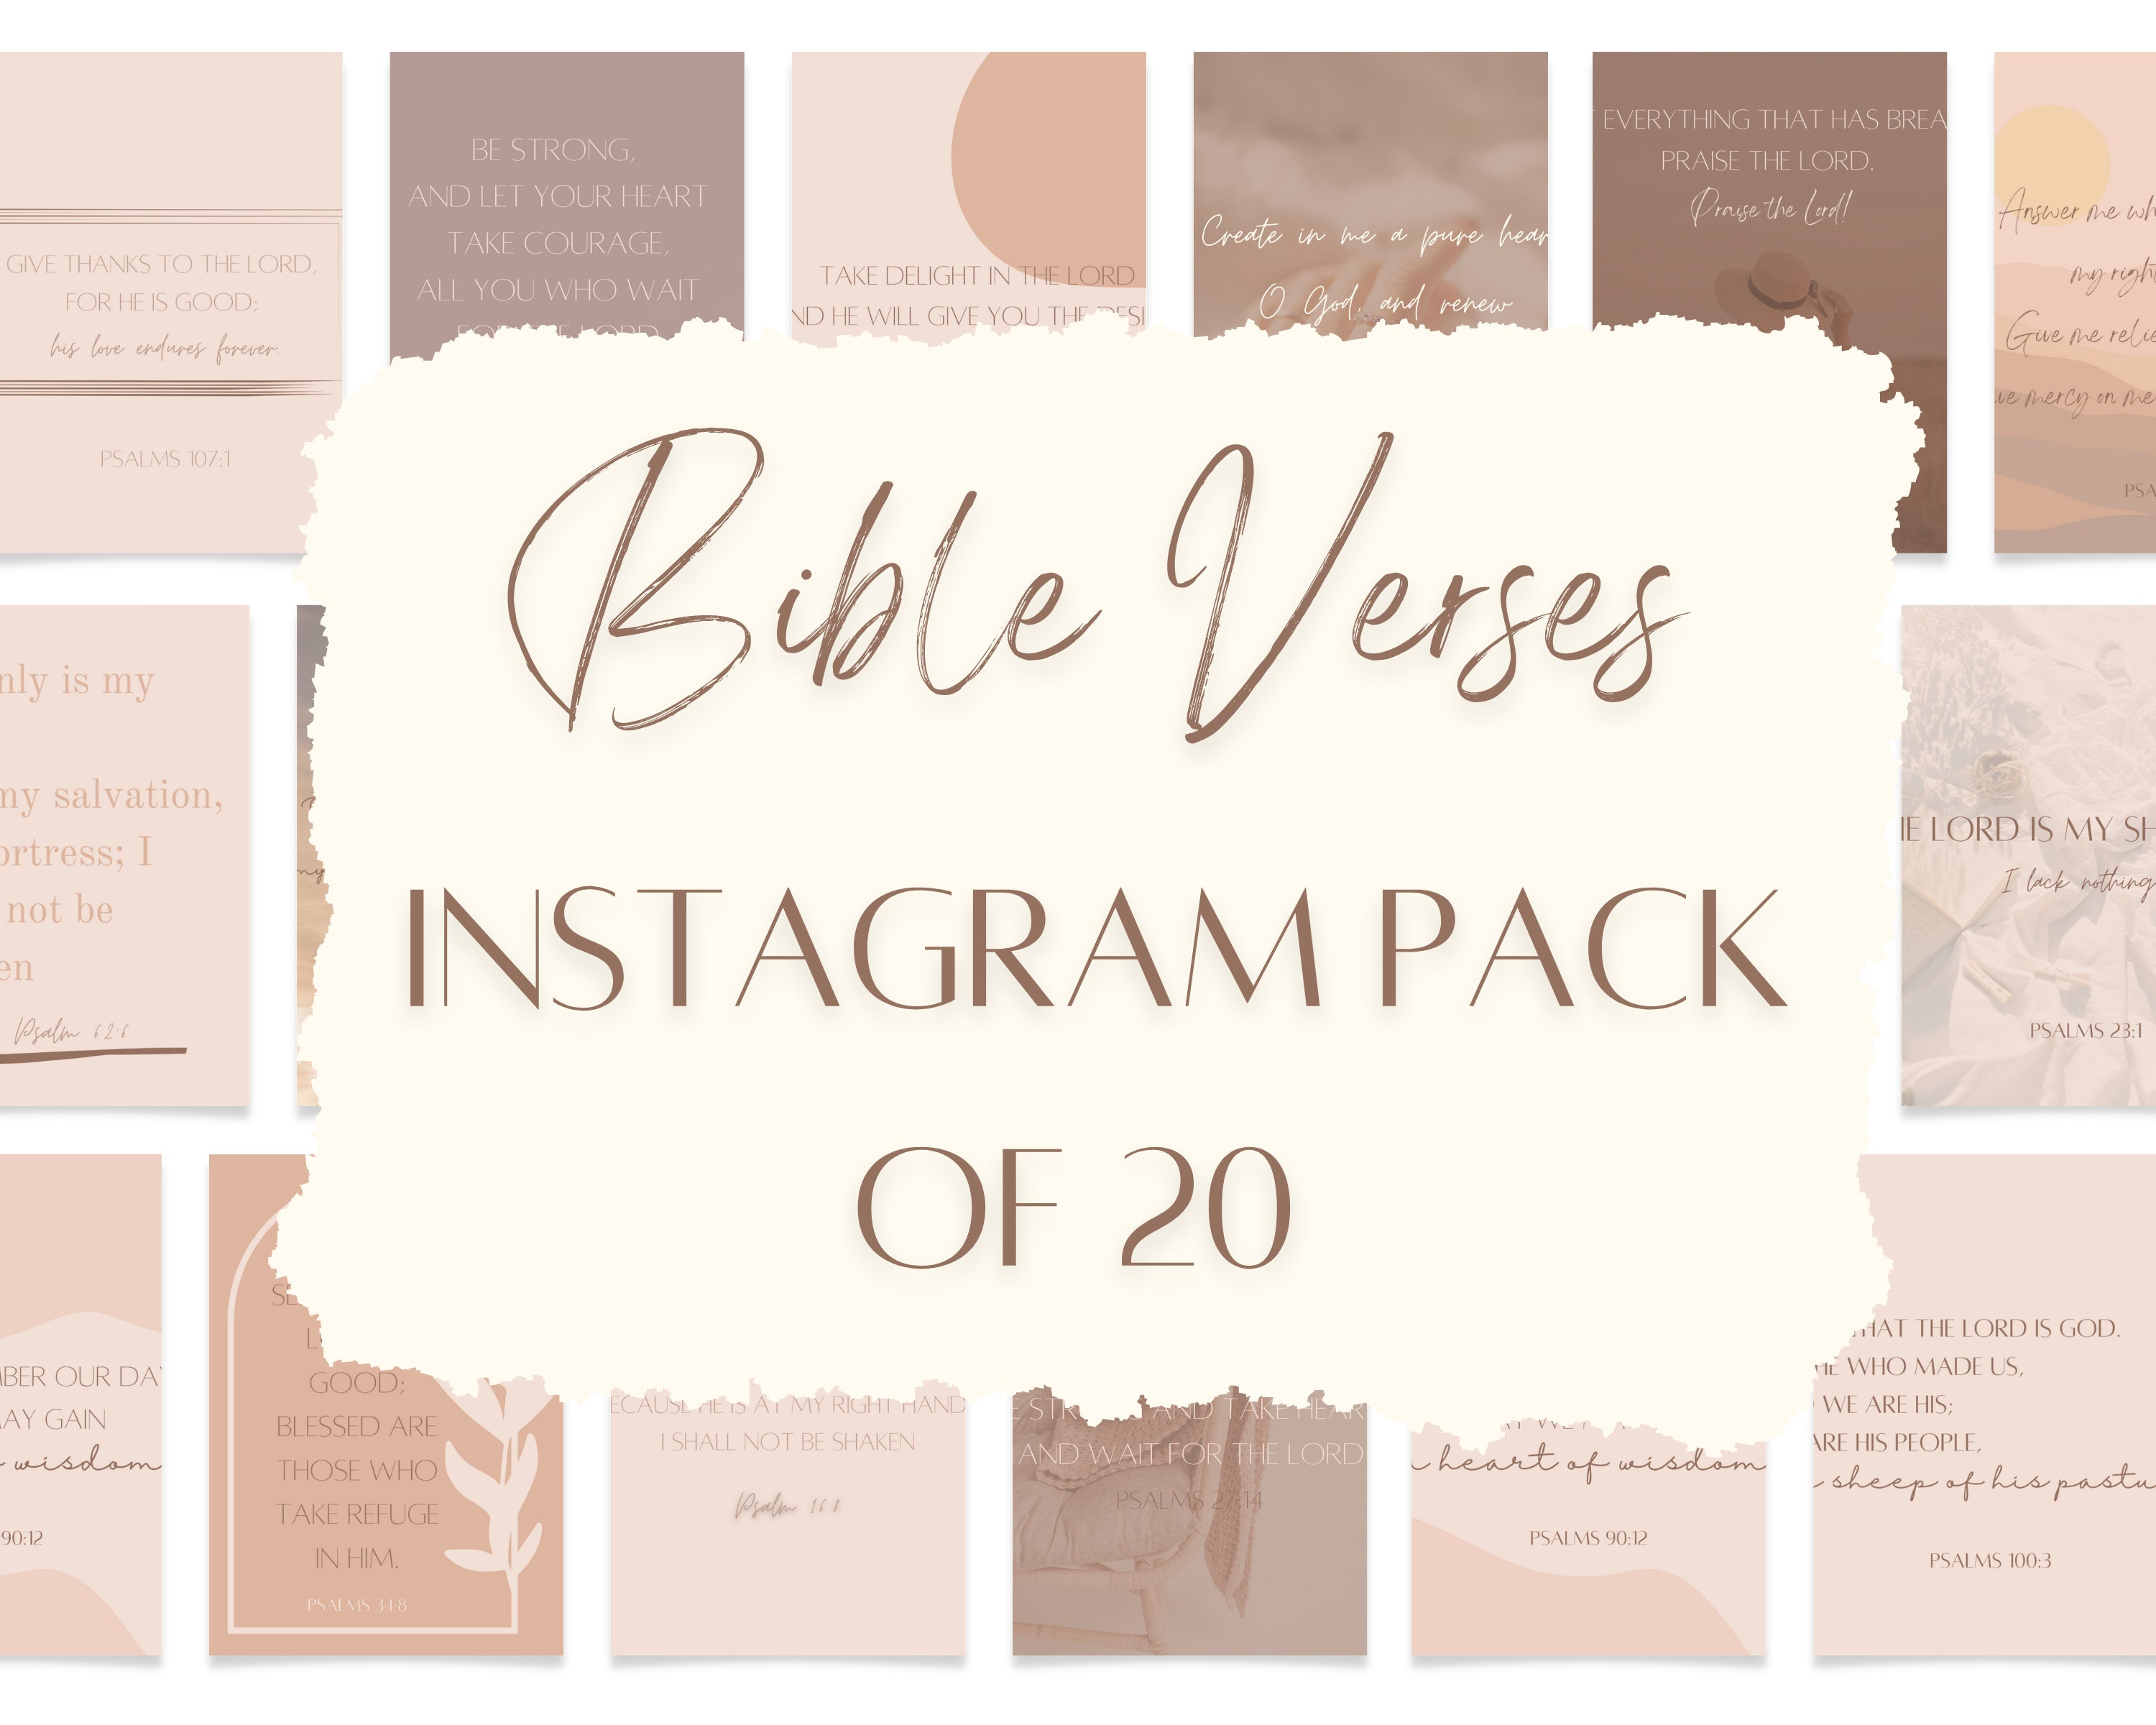 heartofwisdom posted to Instagram: 100 Bible Promises Word Art